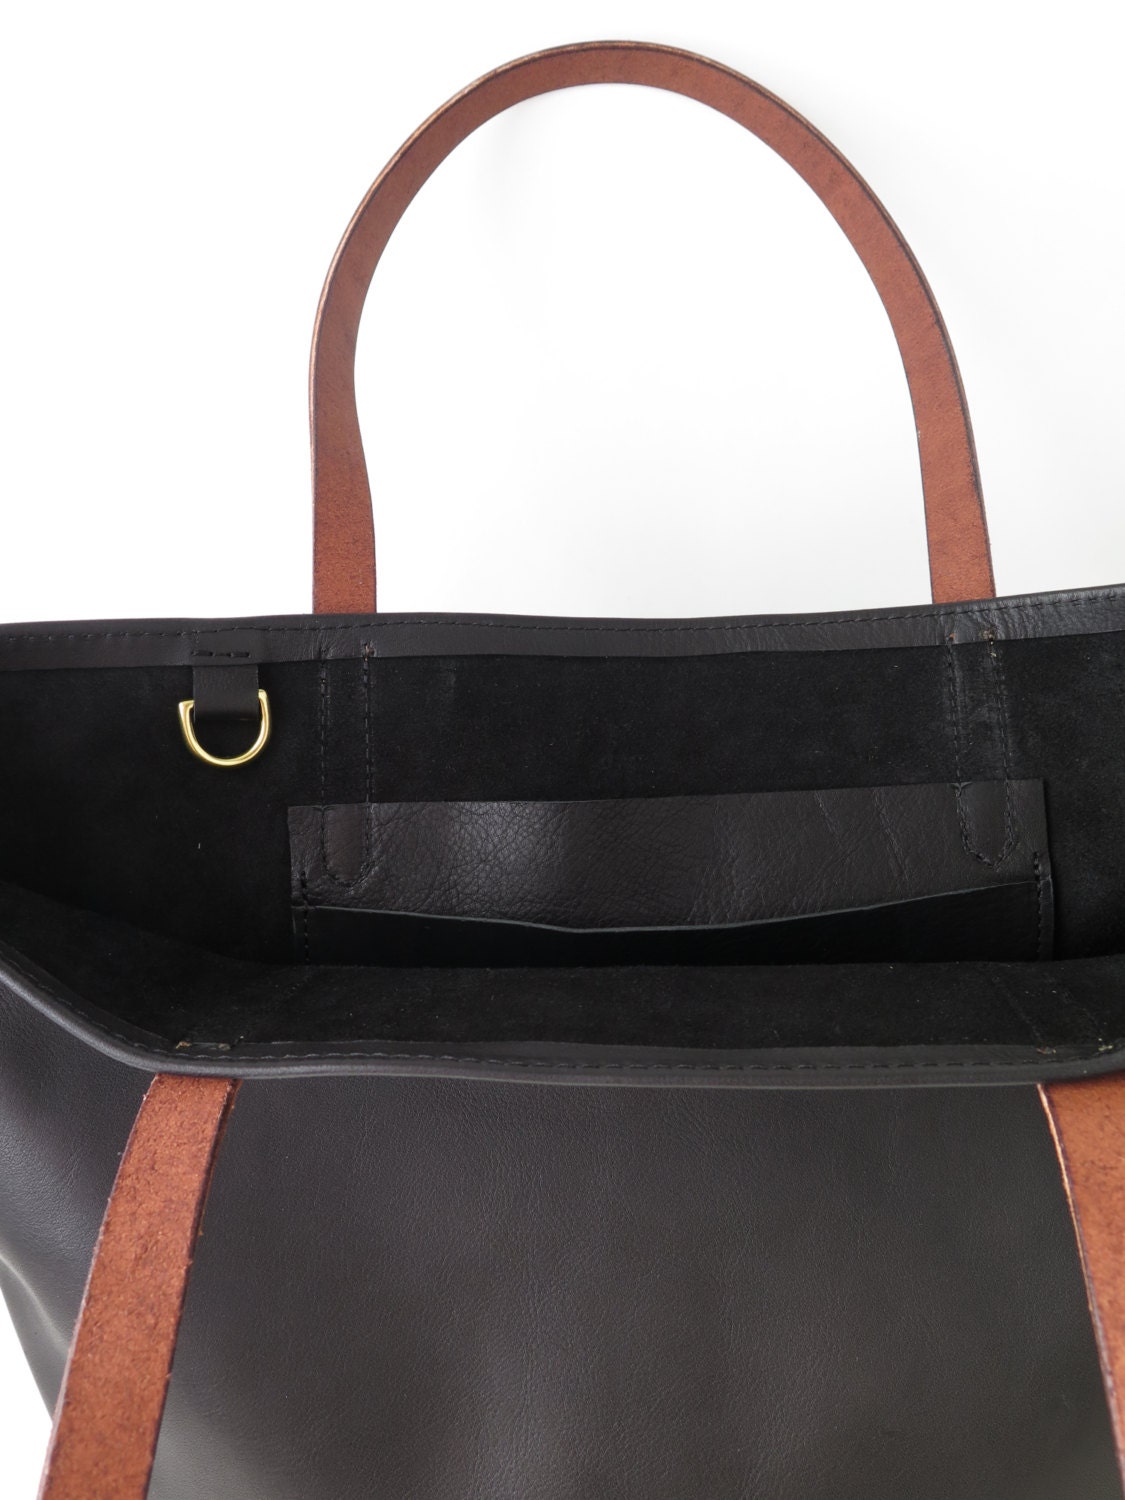 Black Leather Tote Bag // Simple Leather Bag // Black Leather